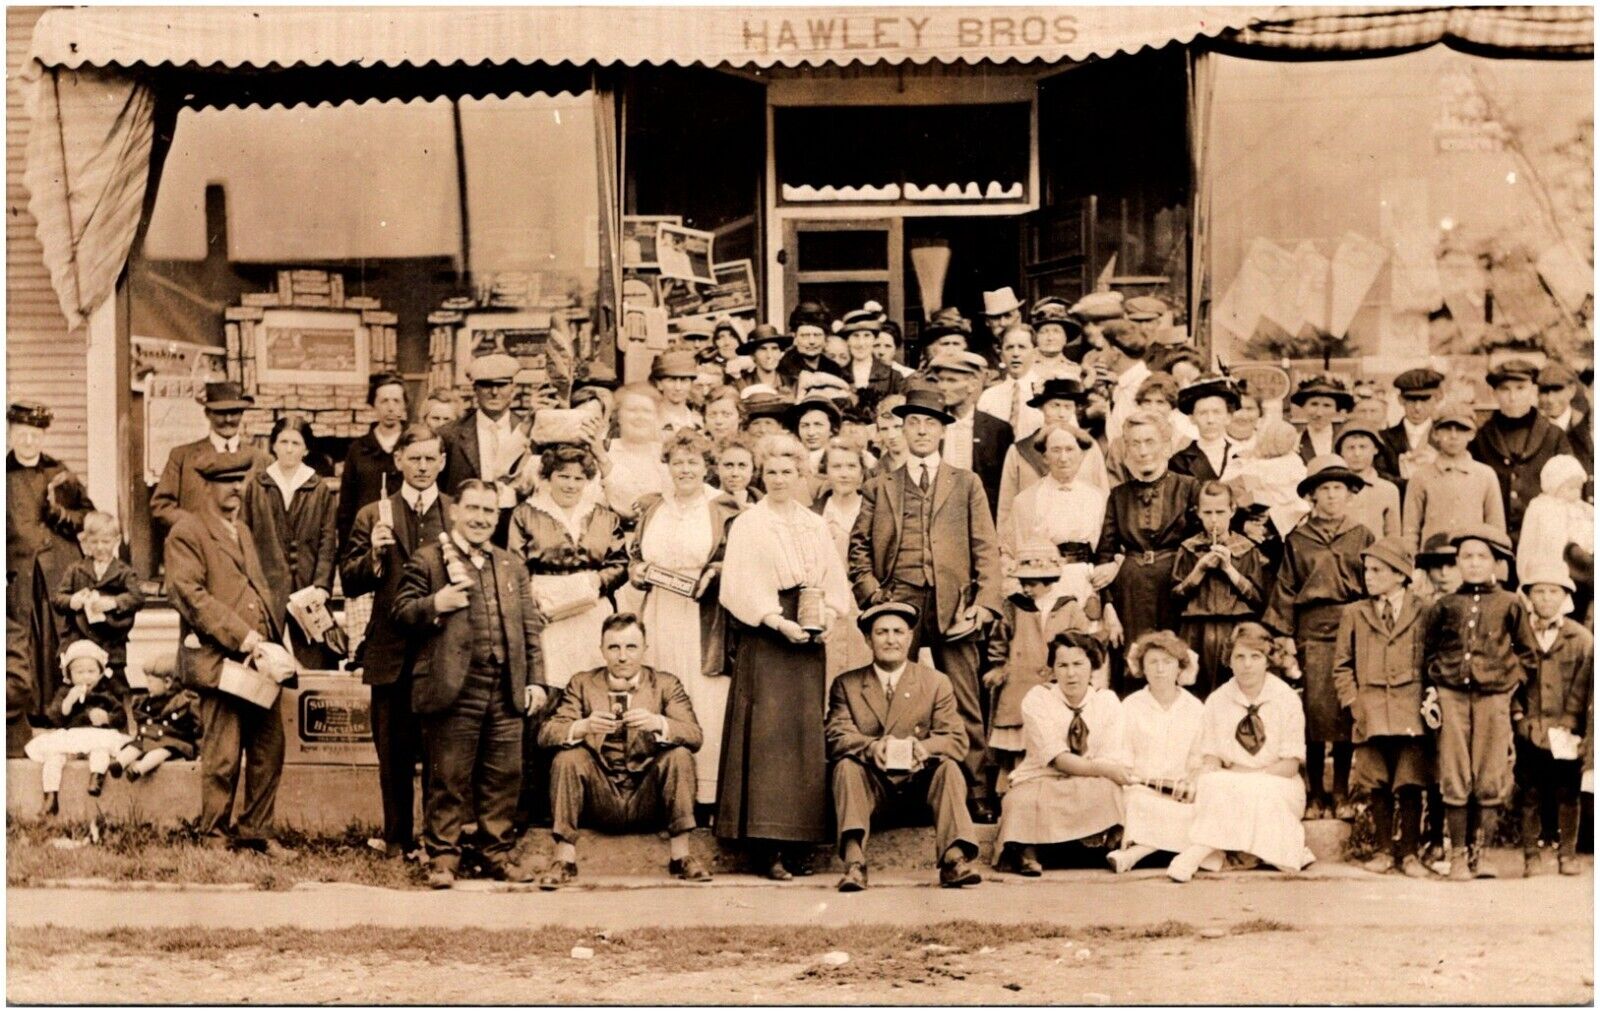 Crowd at Hawley Bros Store Jeffersonville Vermont VT 1910s RPPC Postcard Photo